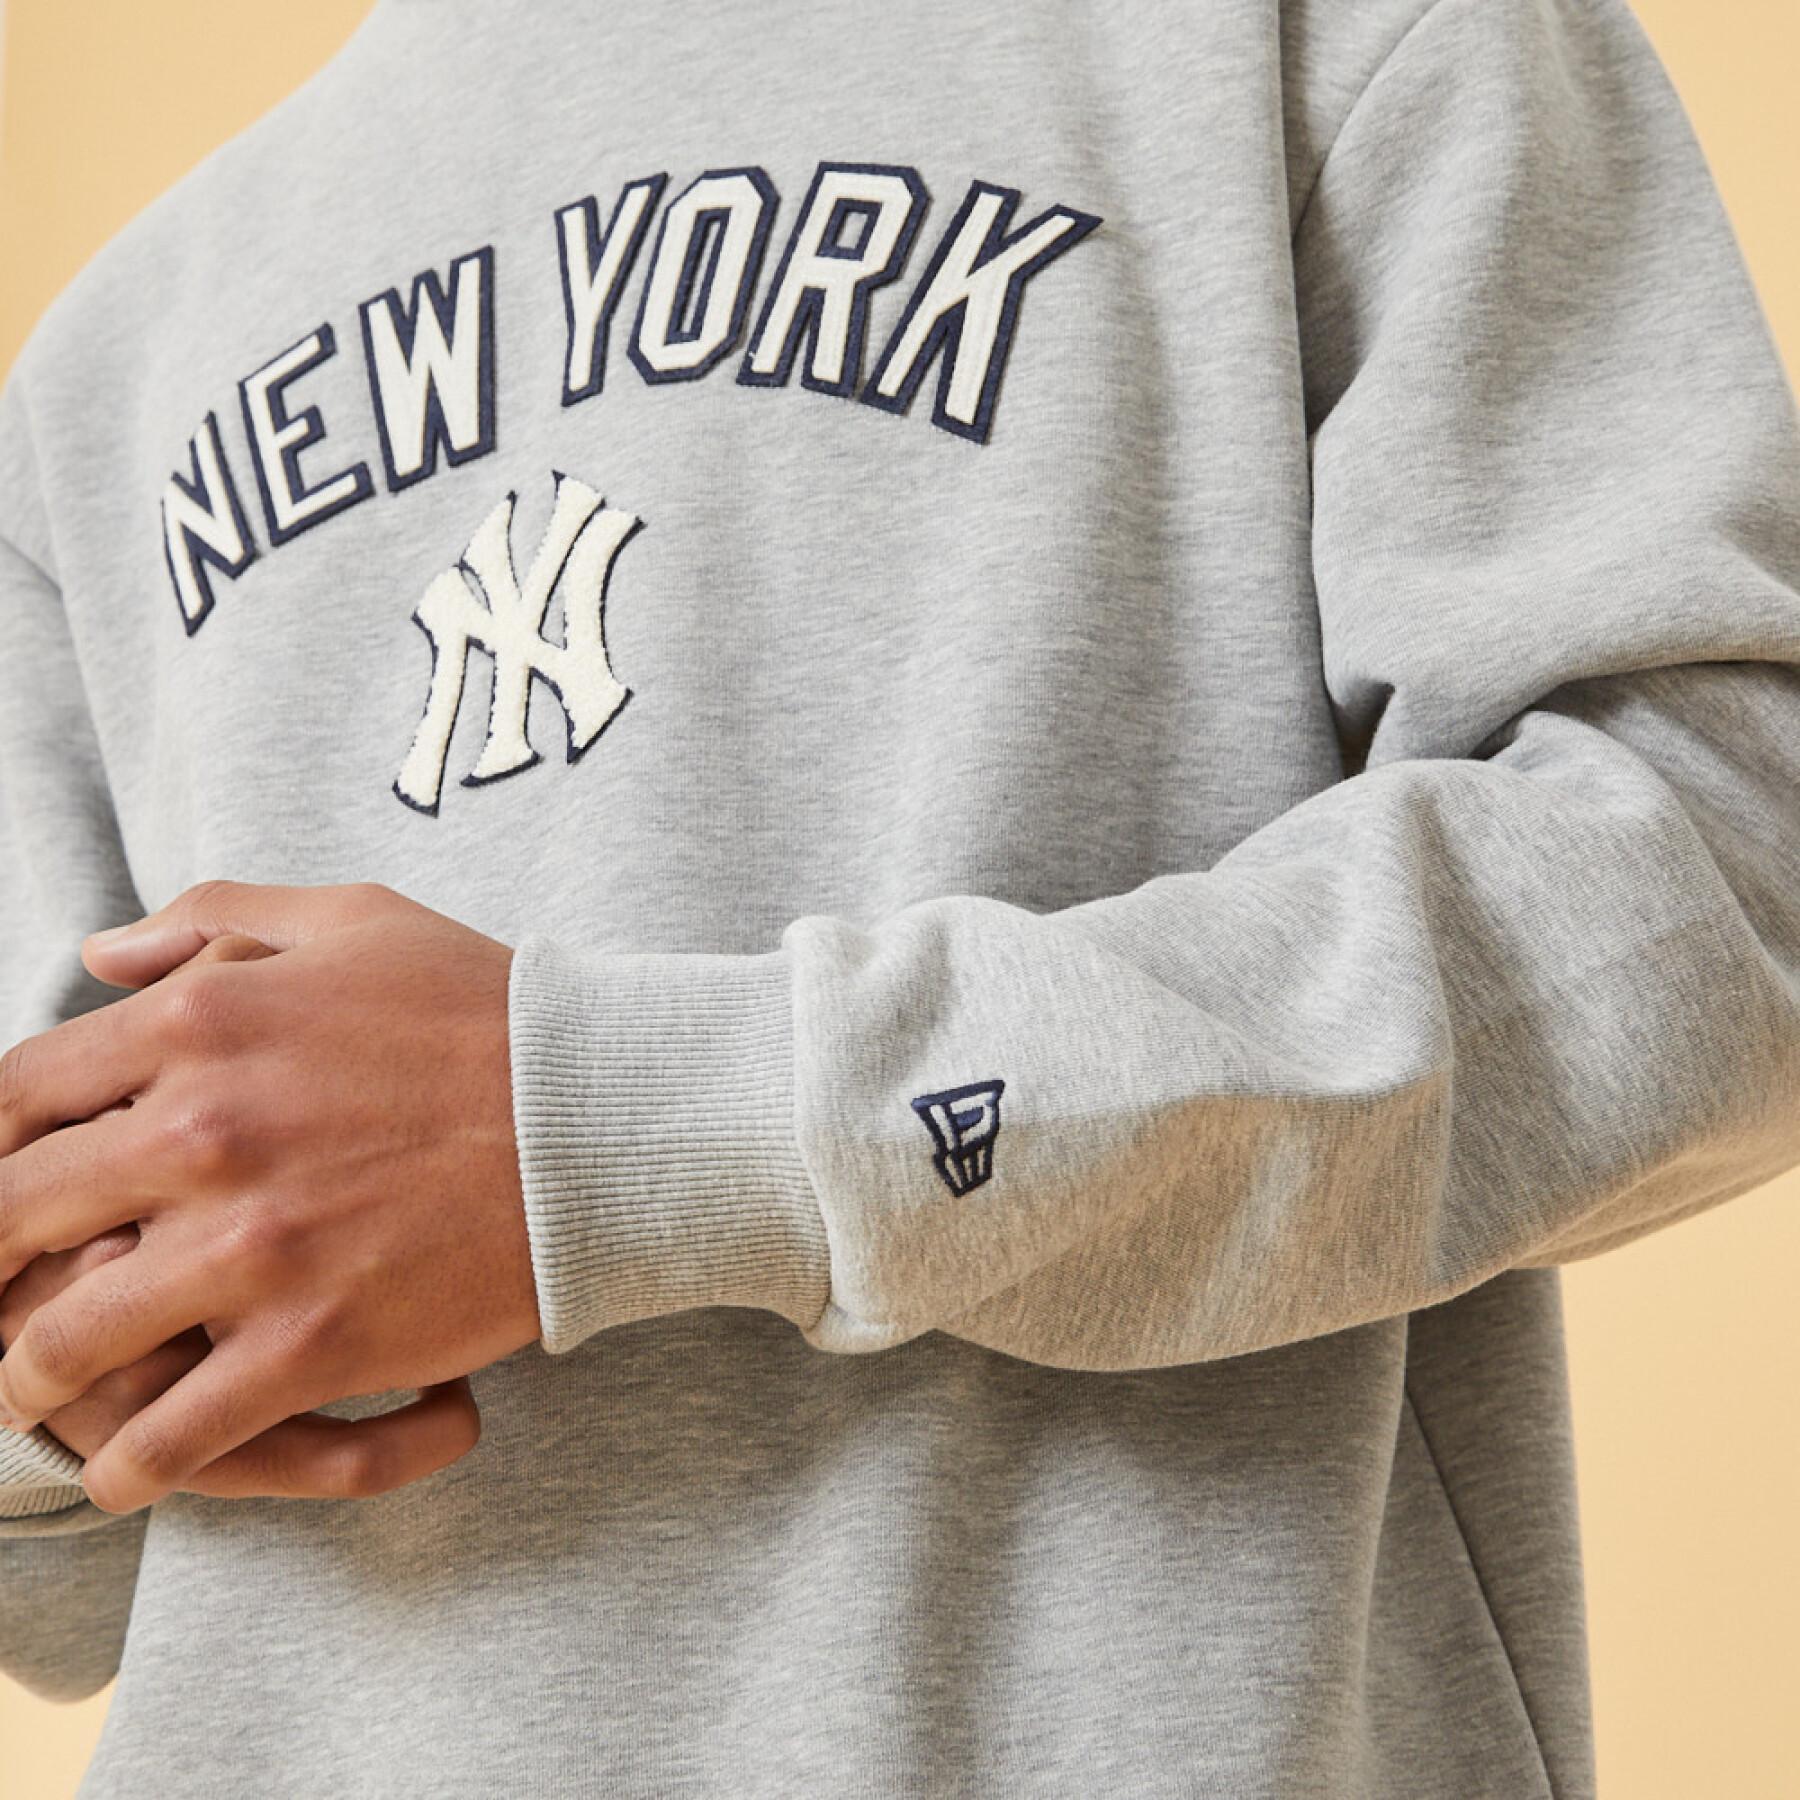 Heritage sweatshirt New York Yankees